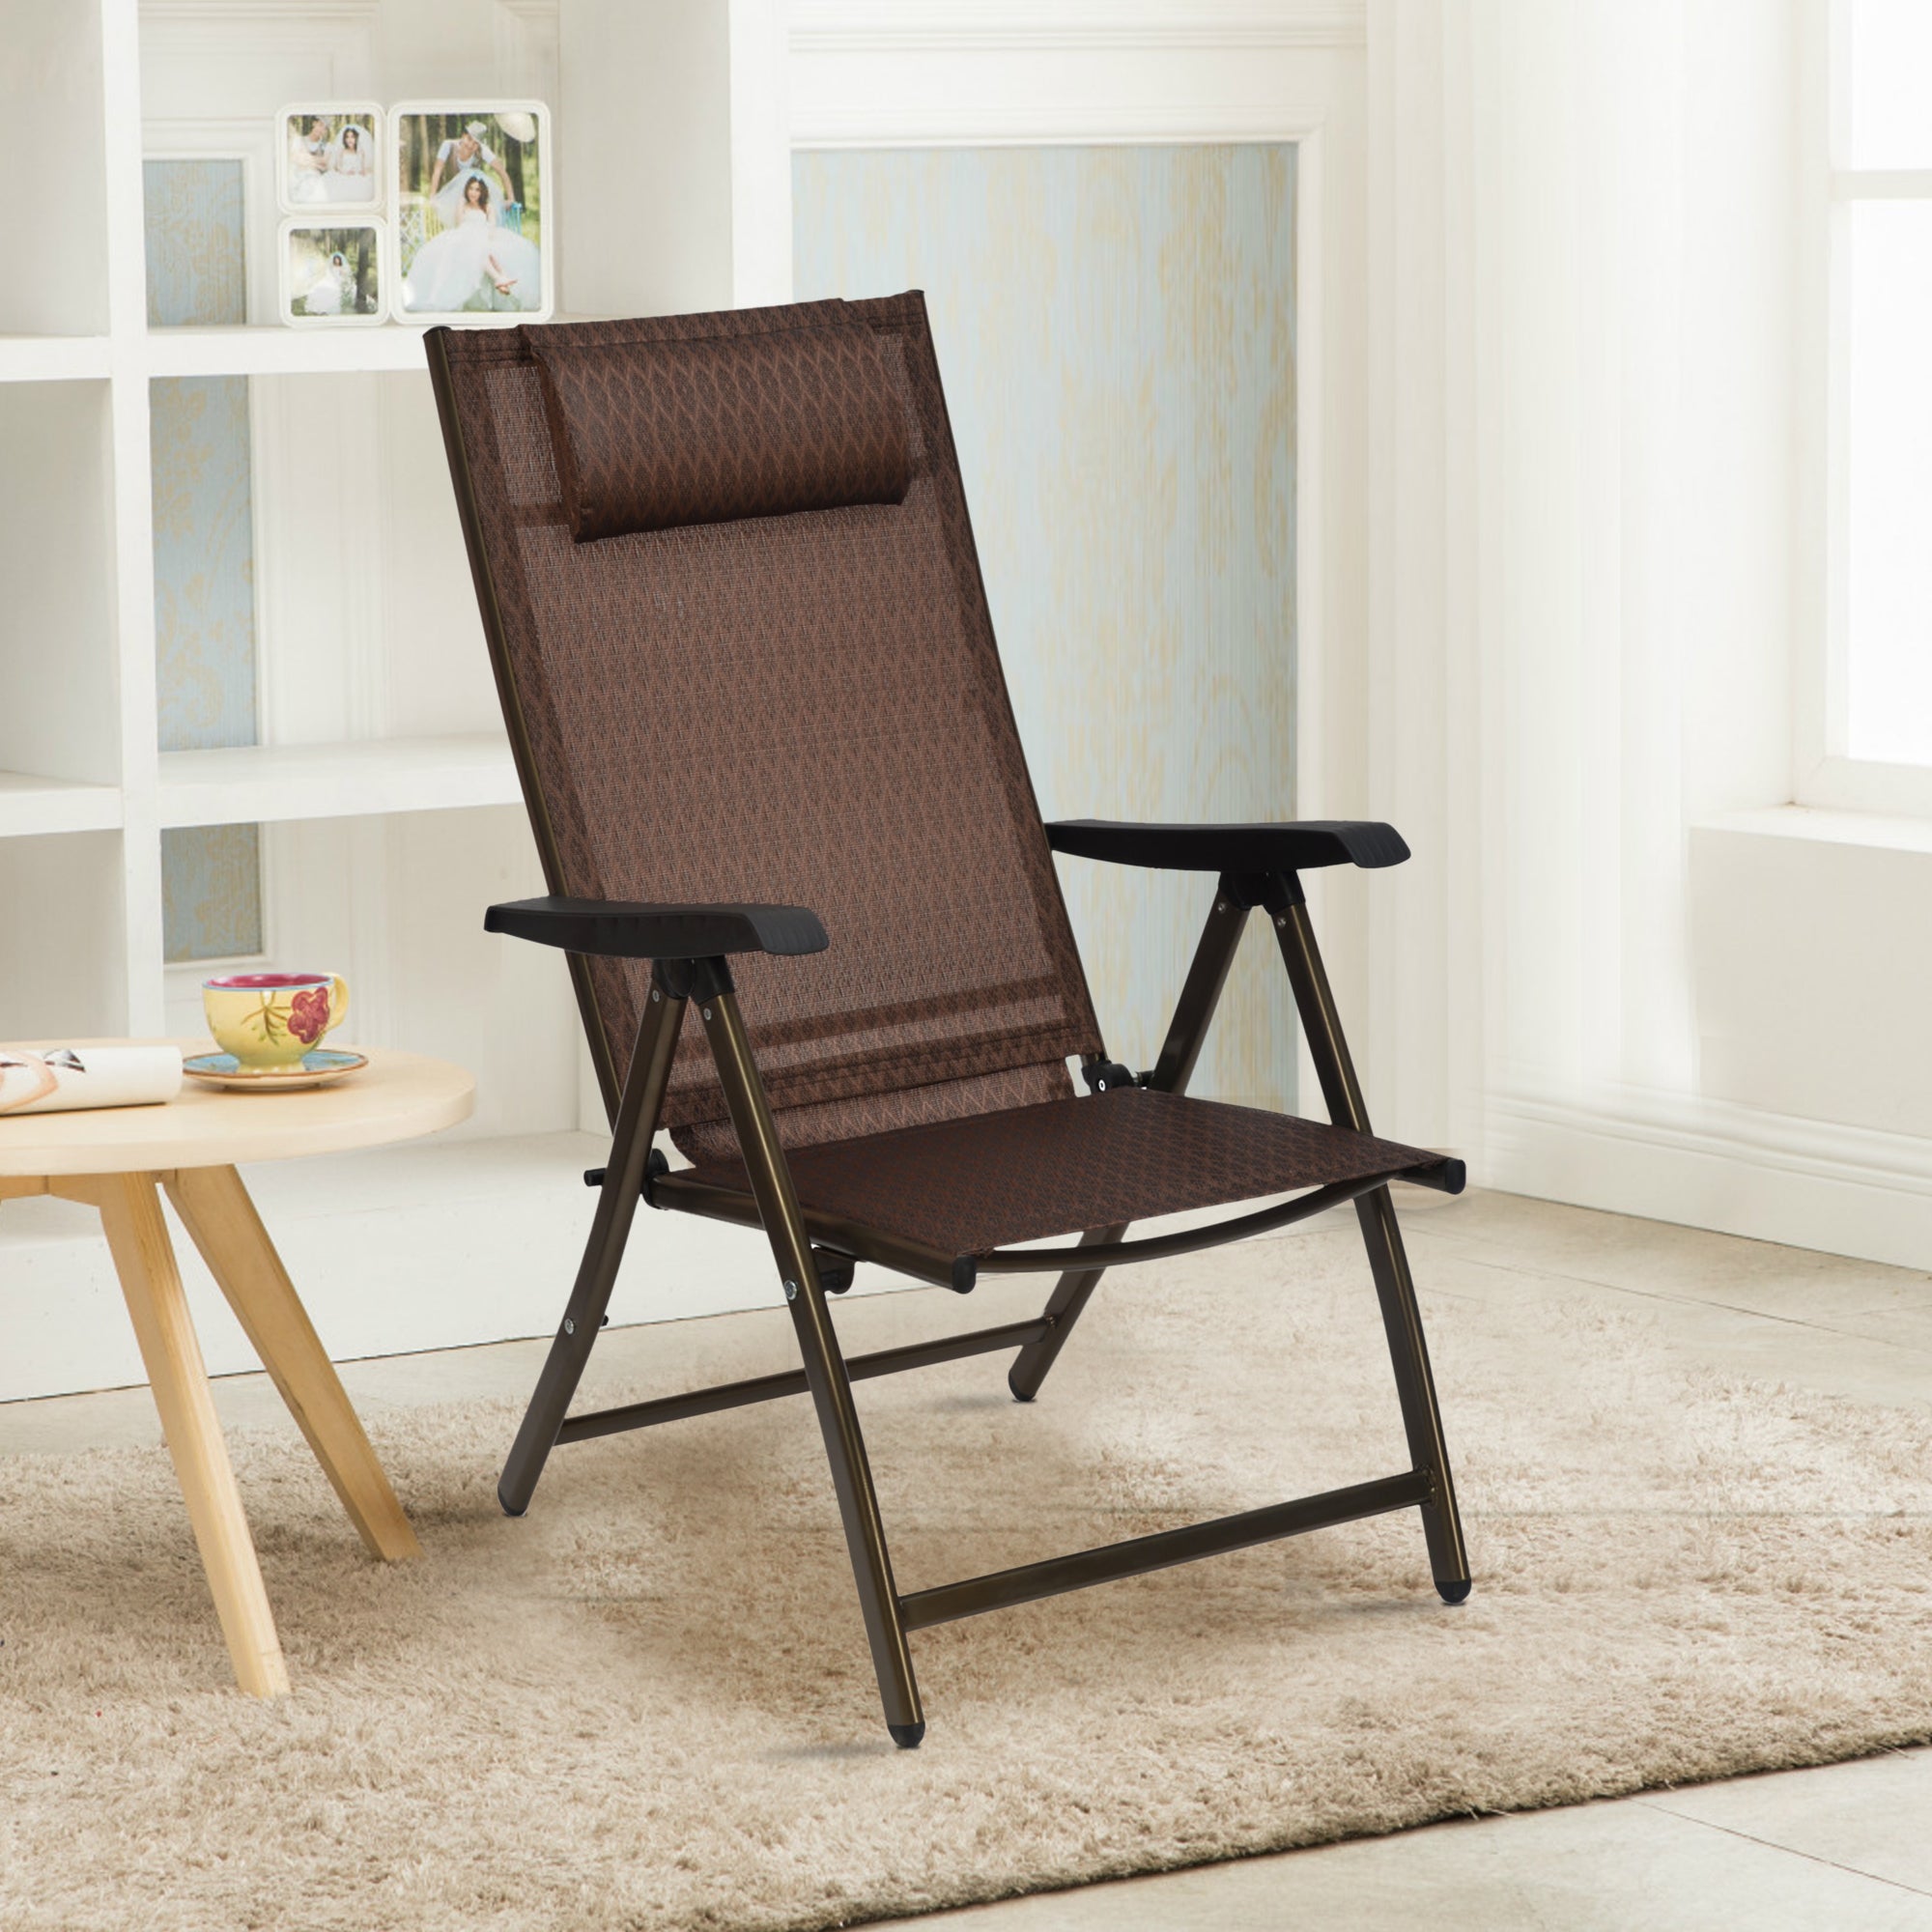 Nilkamal Plesure Lounge Chair Nilkamal Furniture